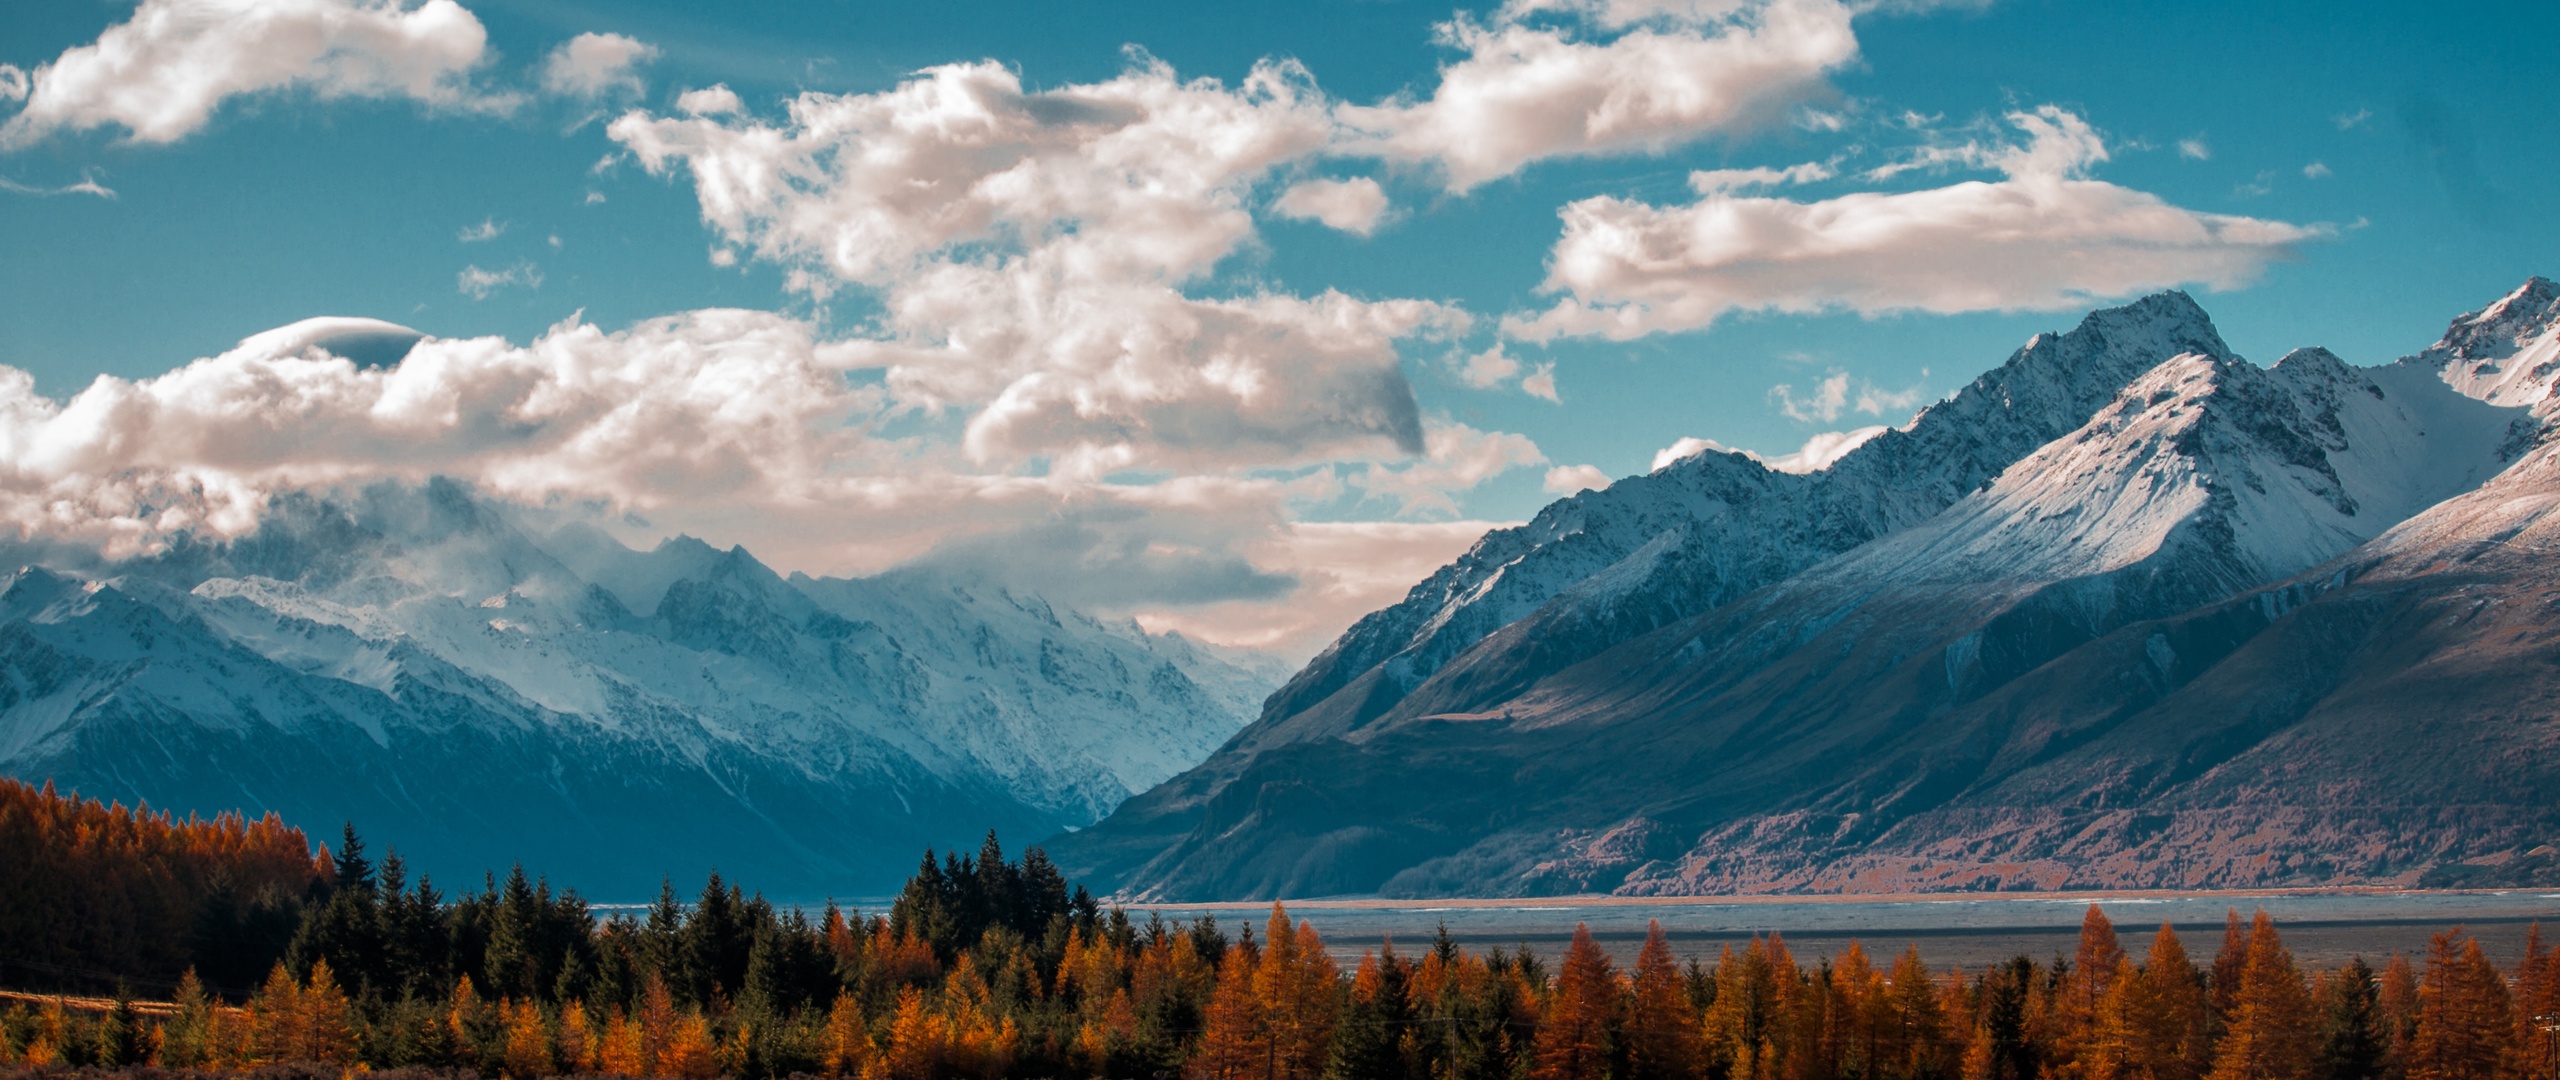 2560x1080 Mountains Landscape Wallpaper,2560x1080 Resolution HD 4k